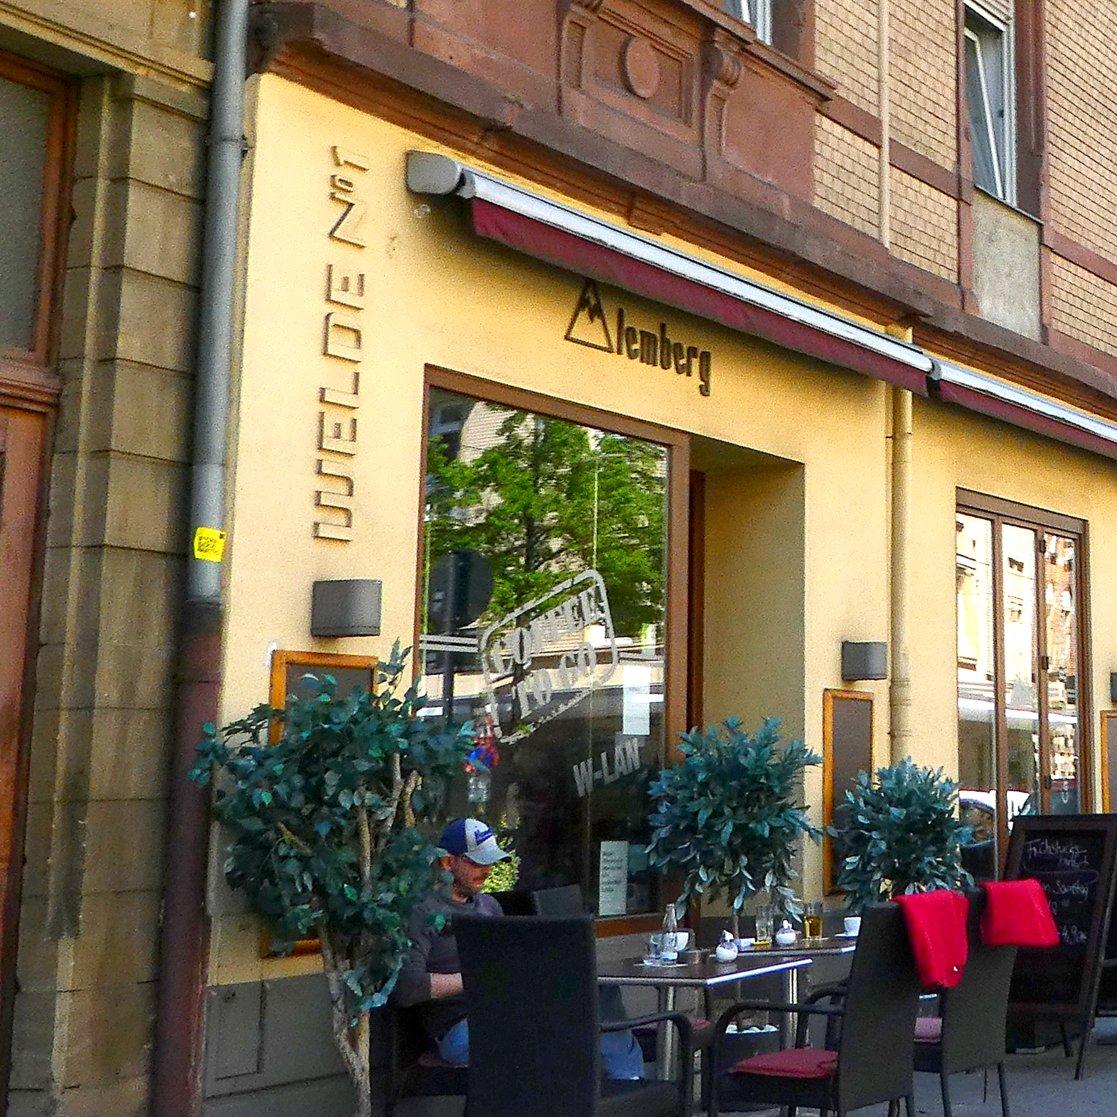 Restaurant "Café- Bar- Restaurant Lemberg" in Mannheim